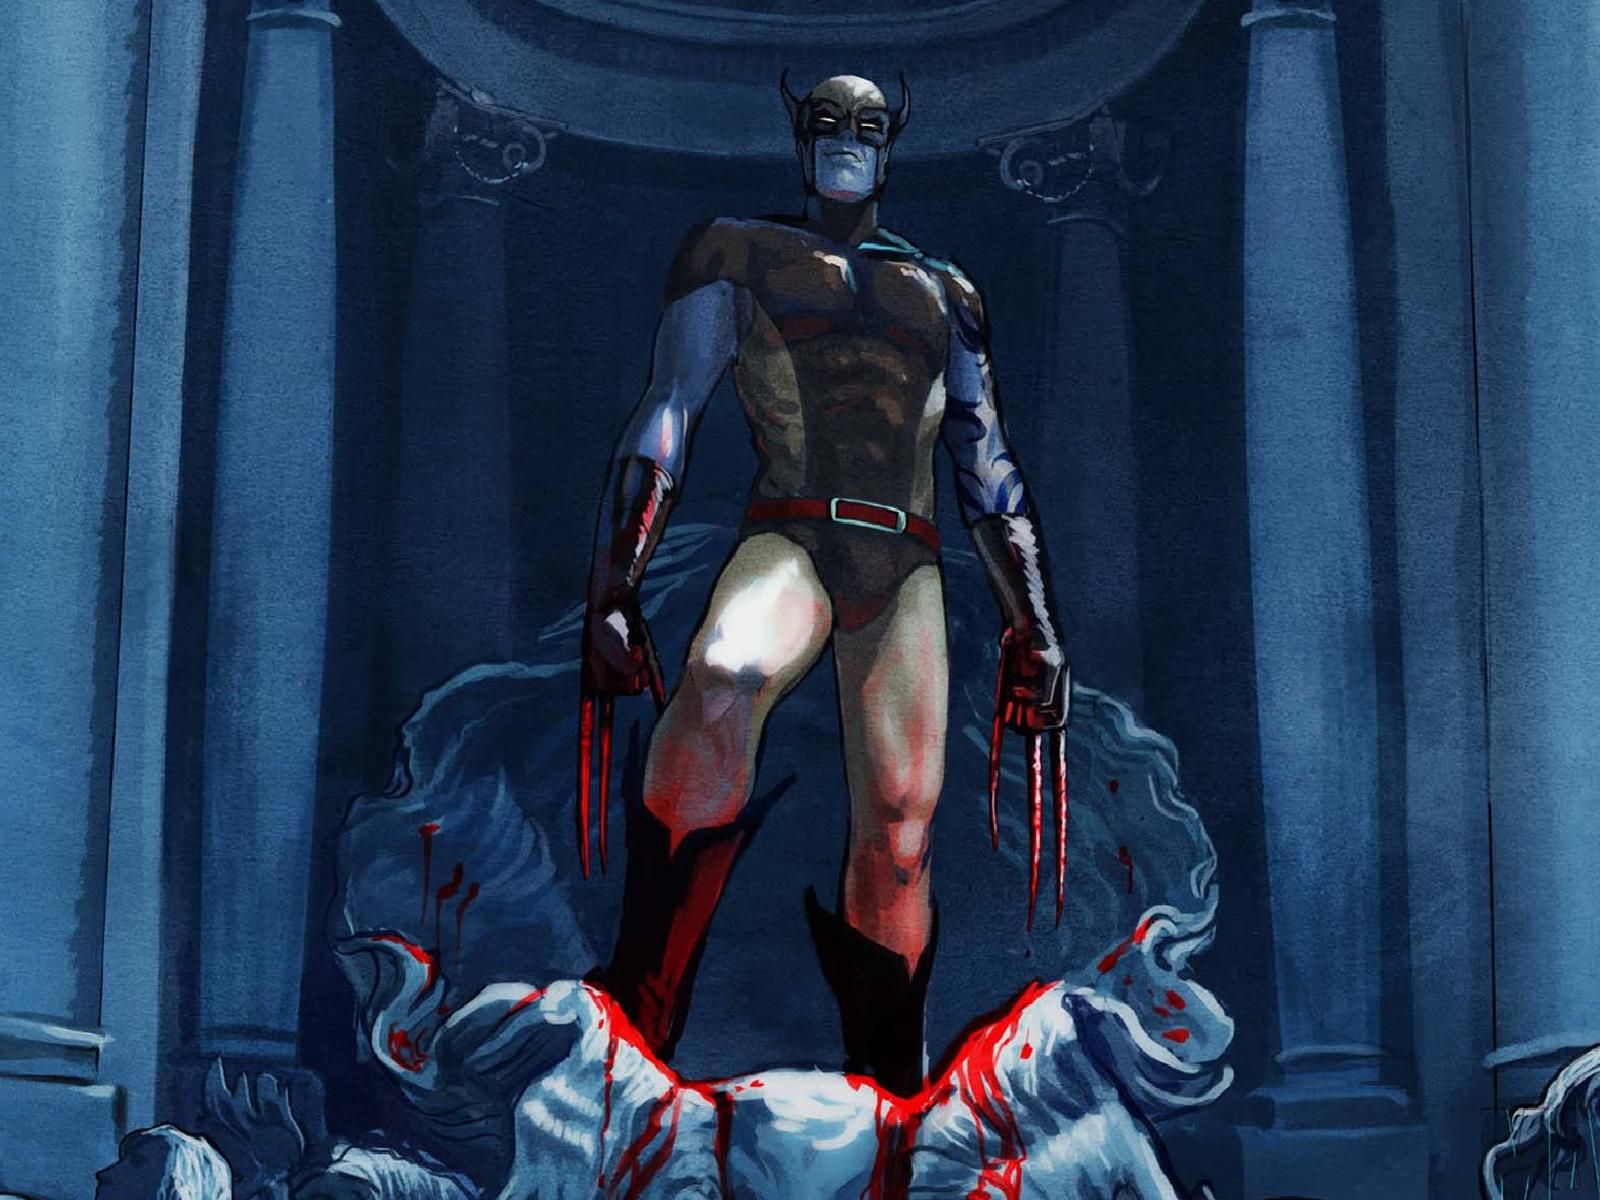 A brooding character from the X-Men universe, Dark Wolverine Daken. Comics-themed desktop wallpaper.